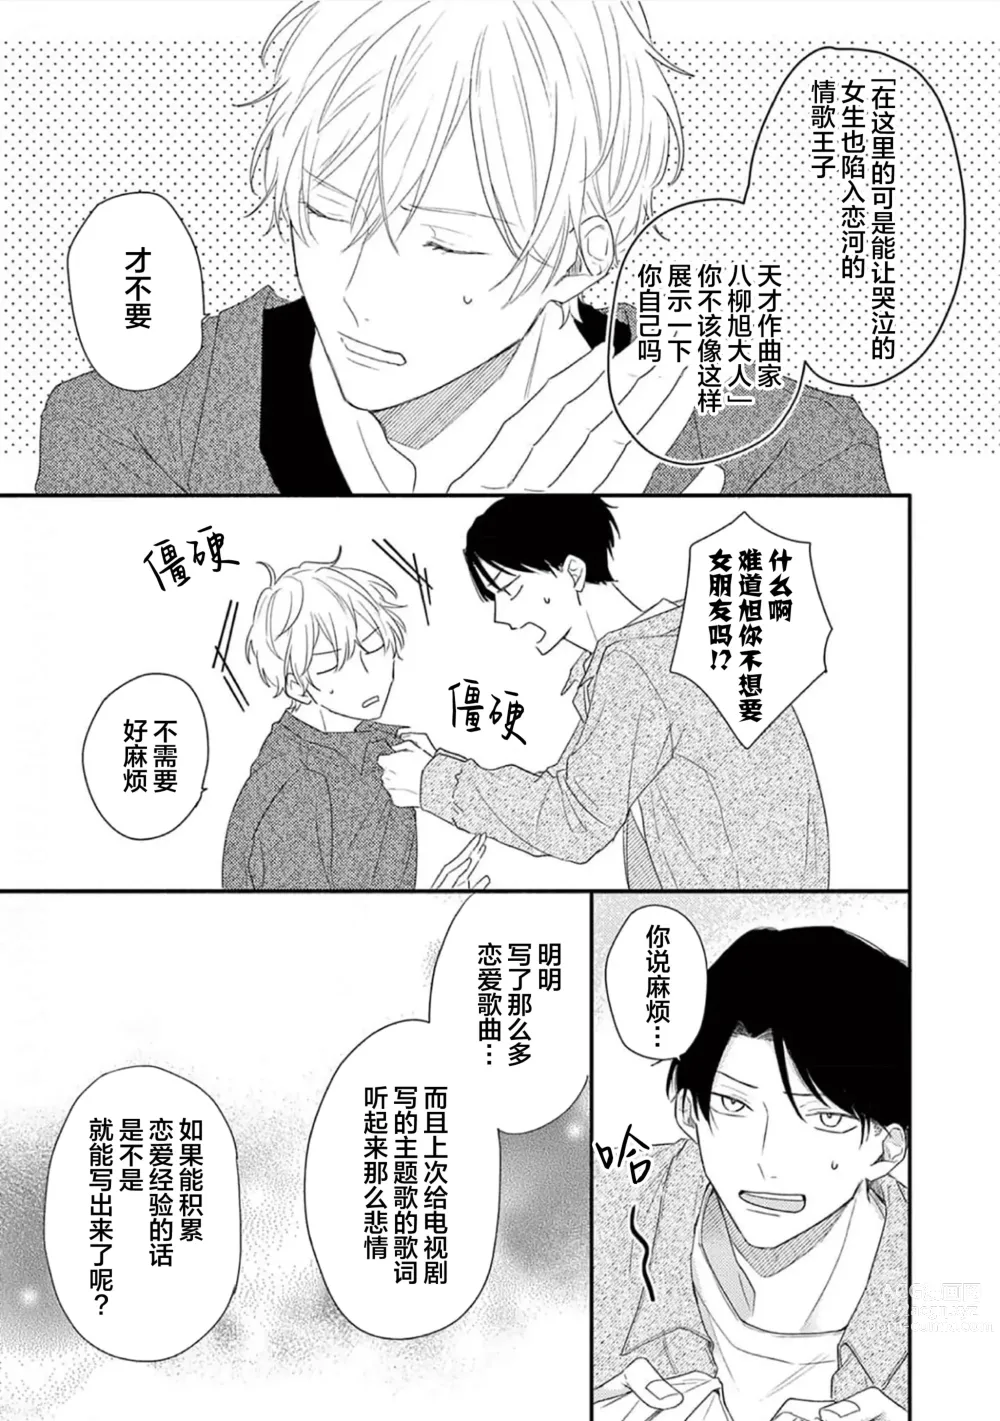 Page 9 of manga 直到这曲恋歌结束为止